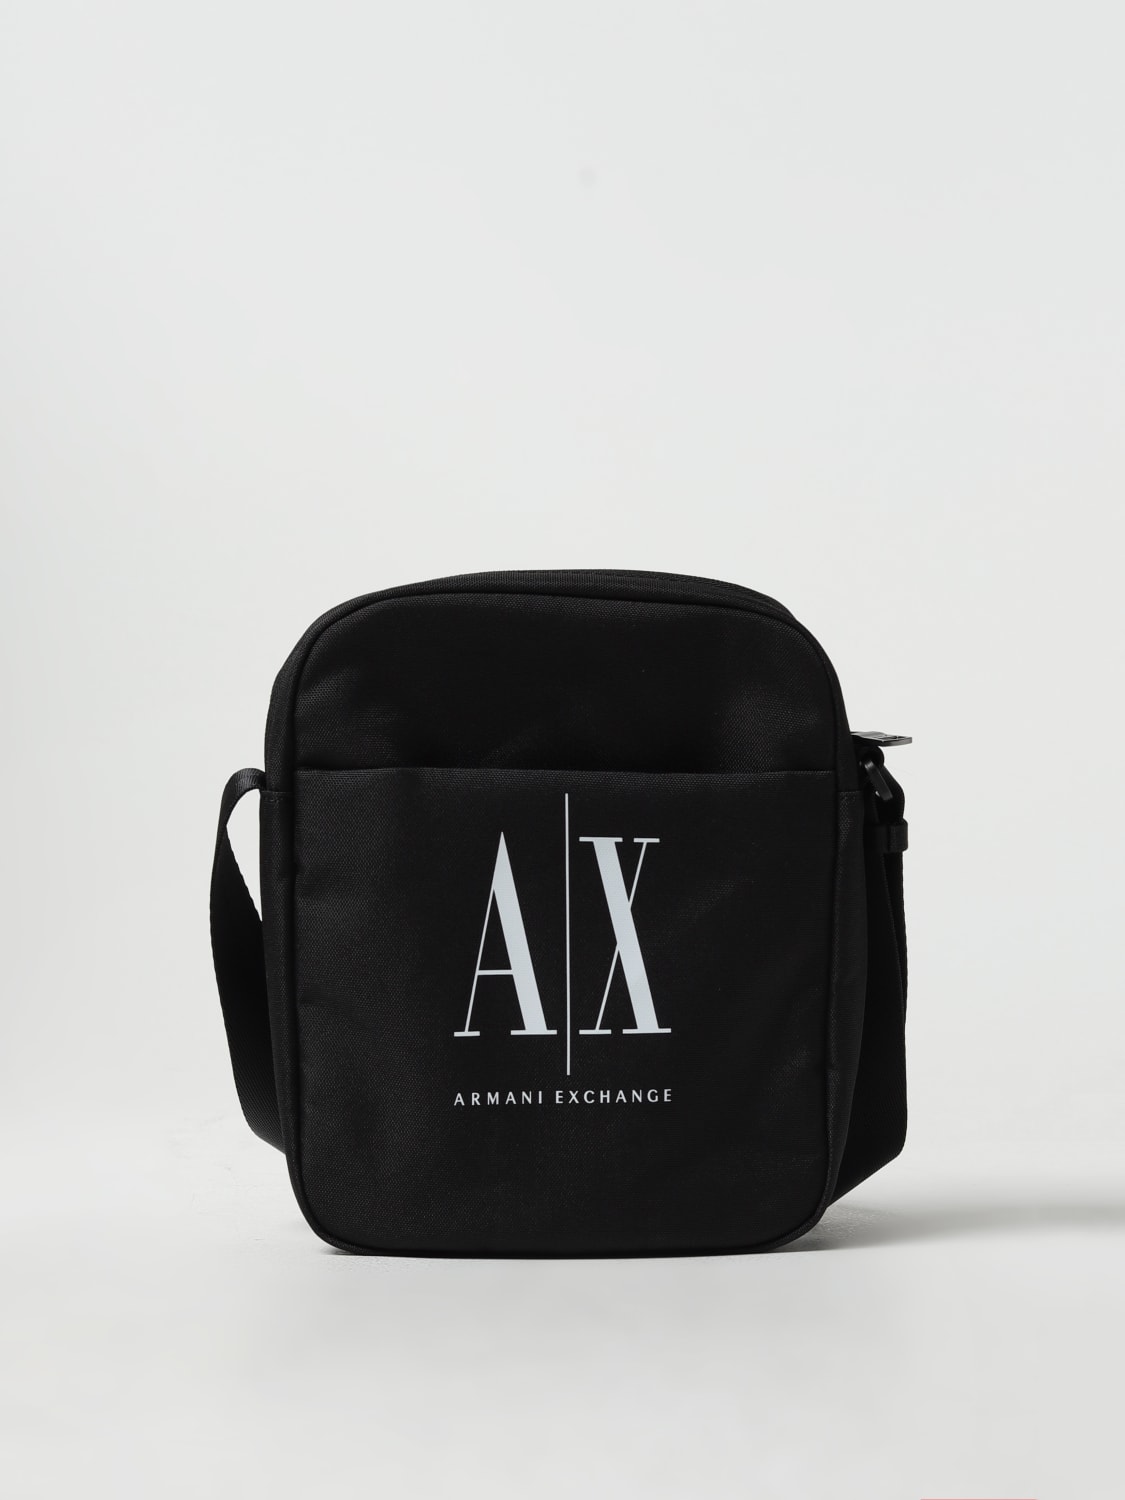 Armani Exchange, Armani Exchange Logo Leather Bum Bag Mens, Black 00020